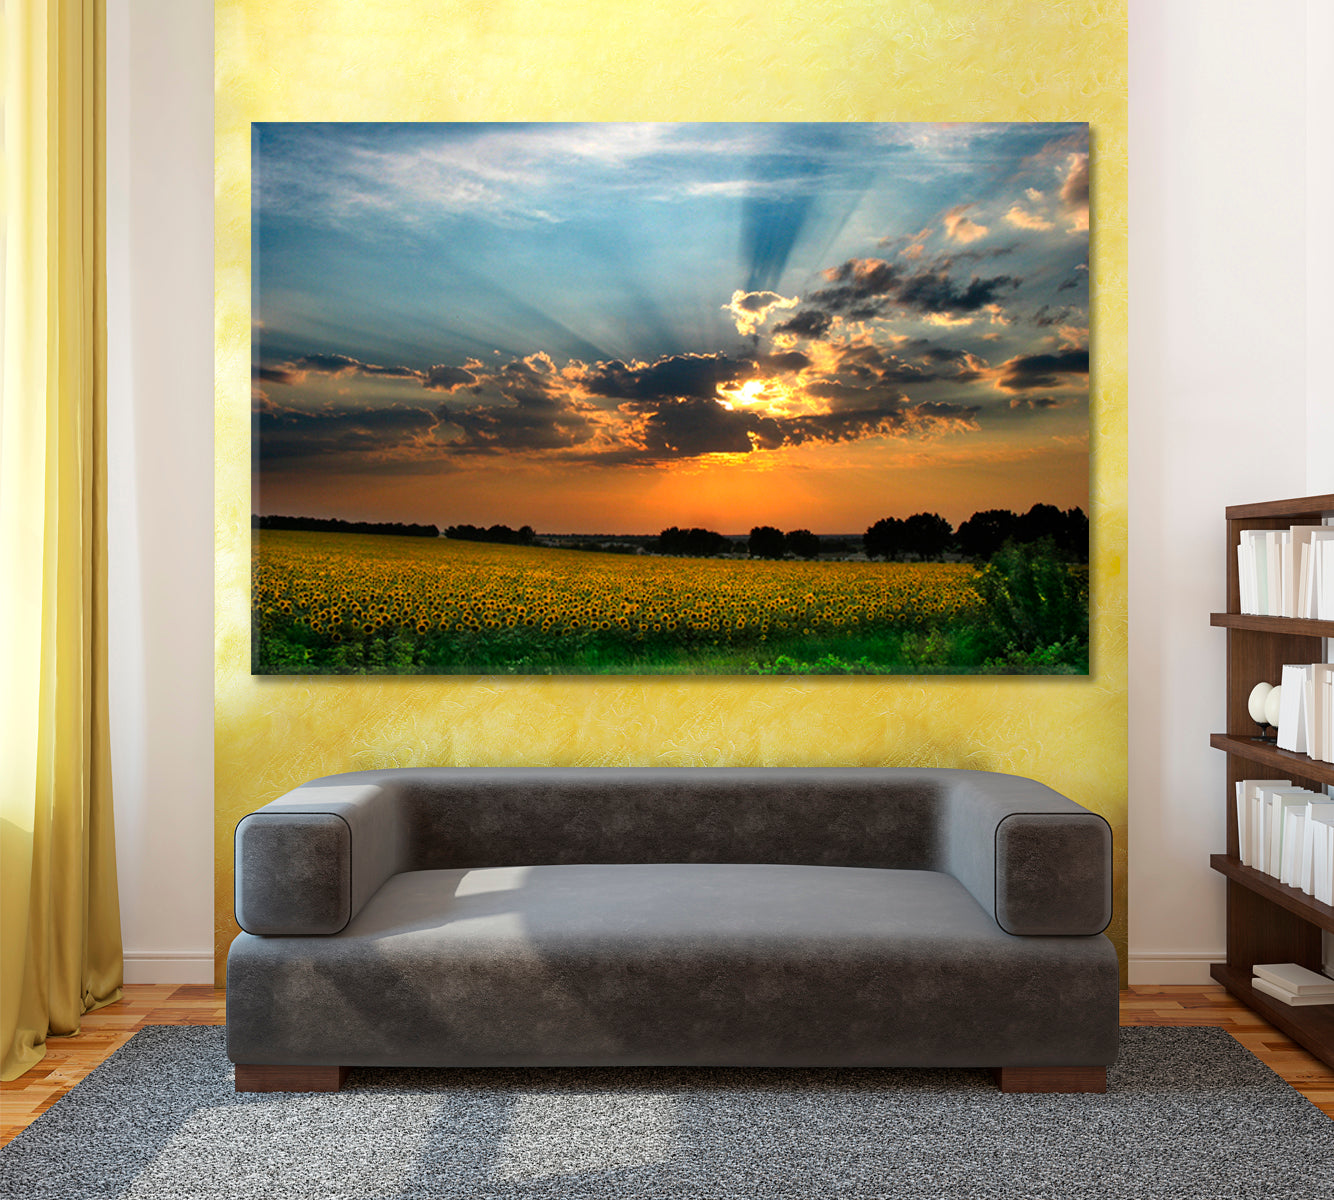 Colorful Sunset Sun Rays Amazing Field of Sunflowers Landscape Scenery Landscape Fine Art Print Artesty 1 panel 24" x 16" 